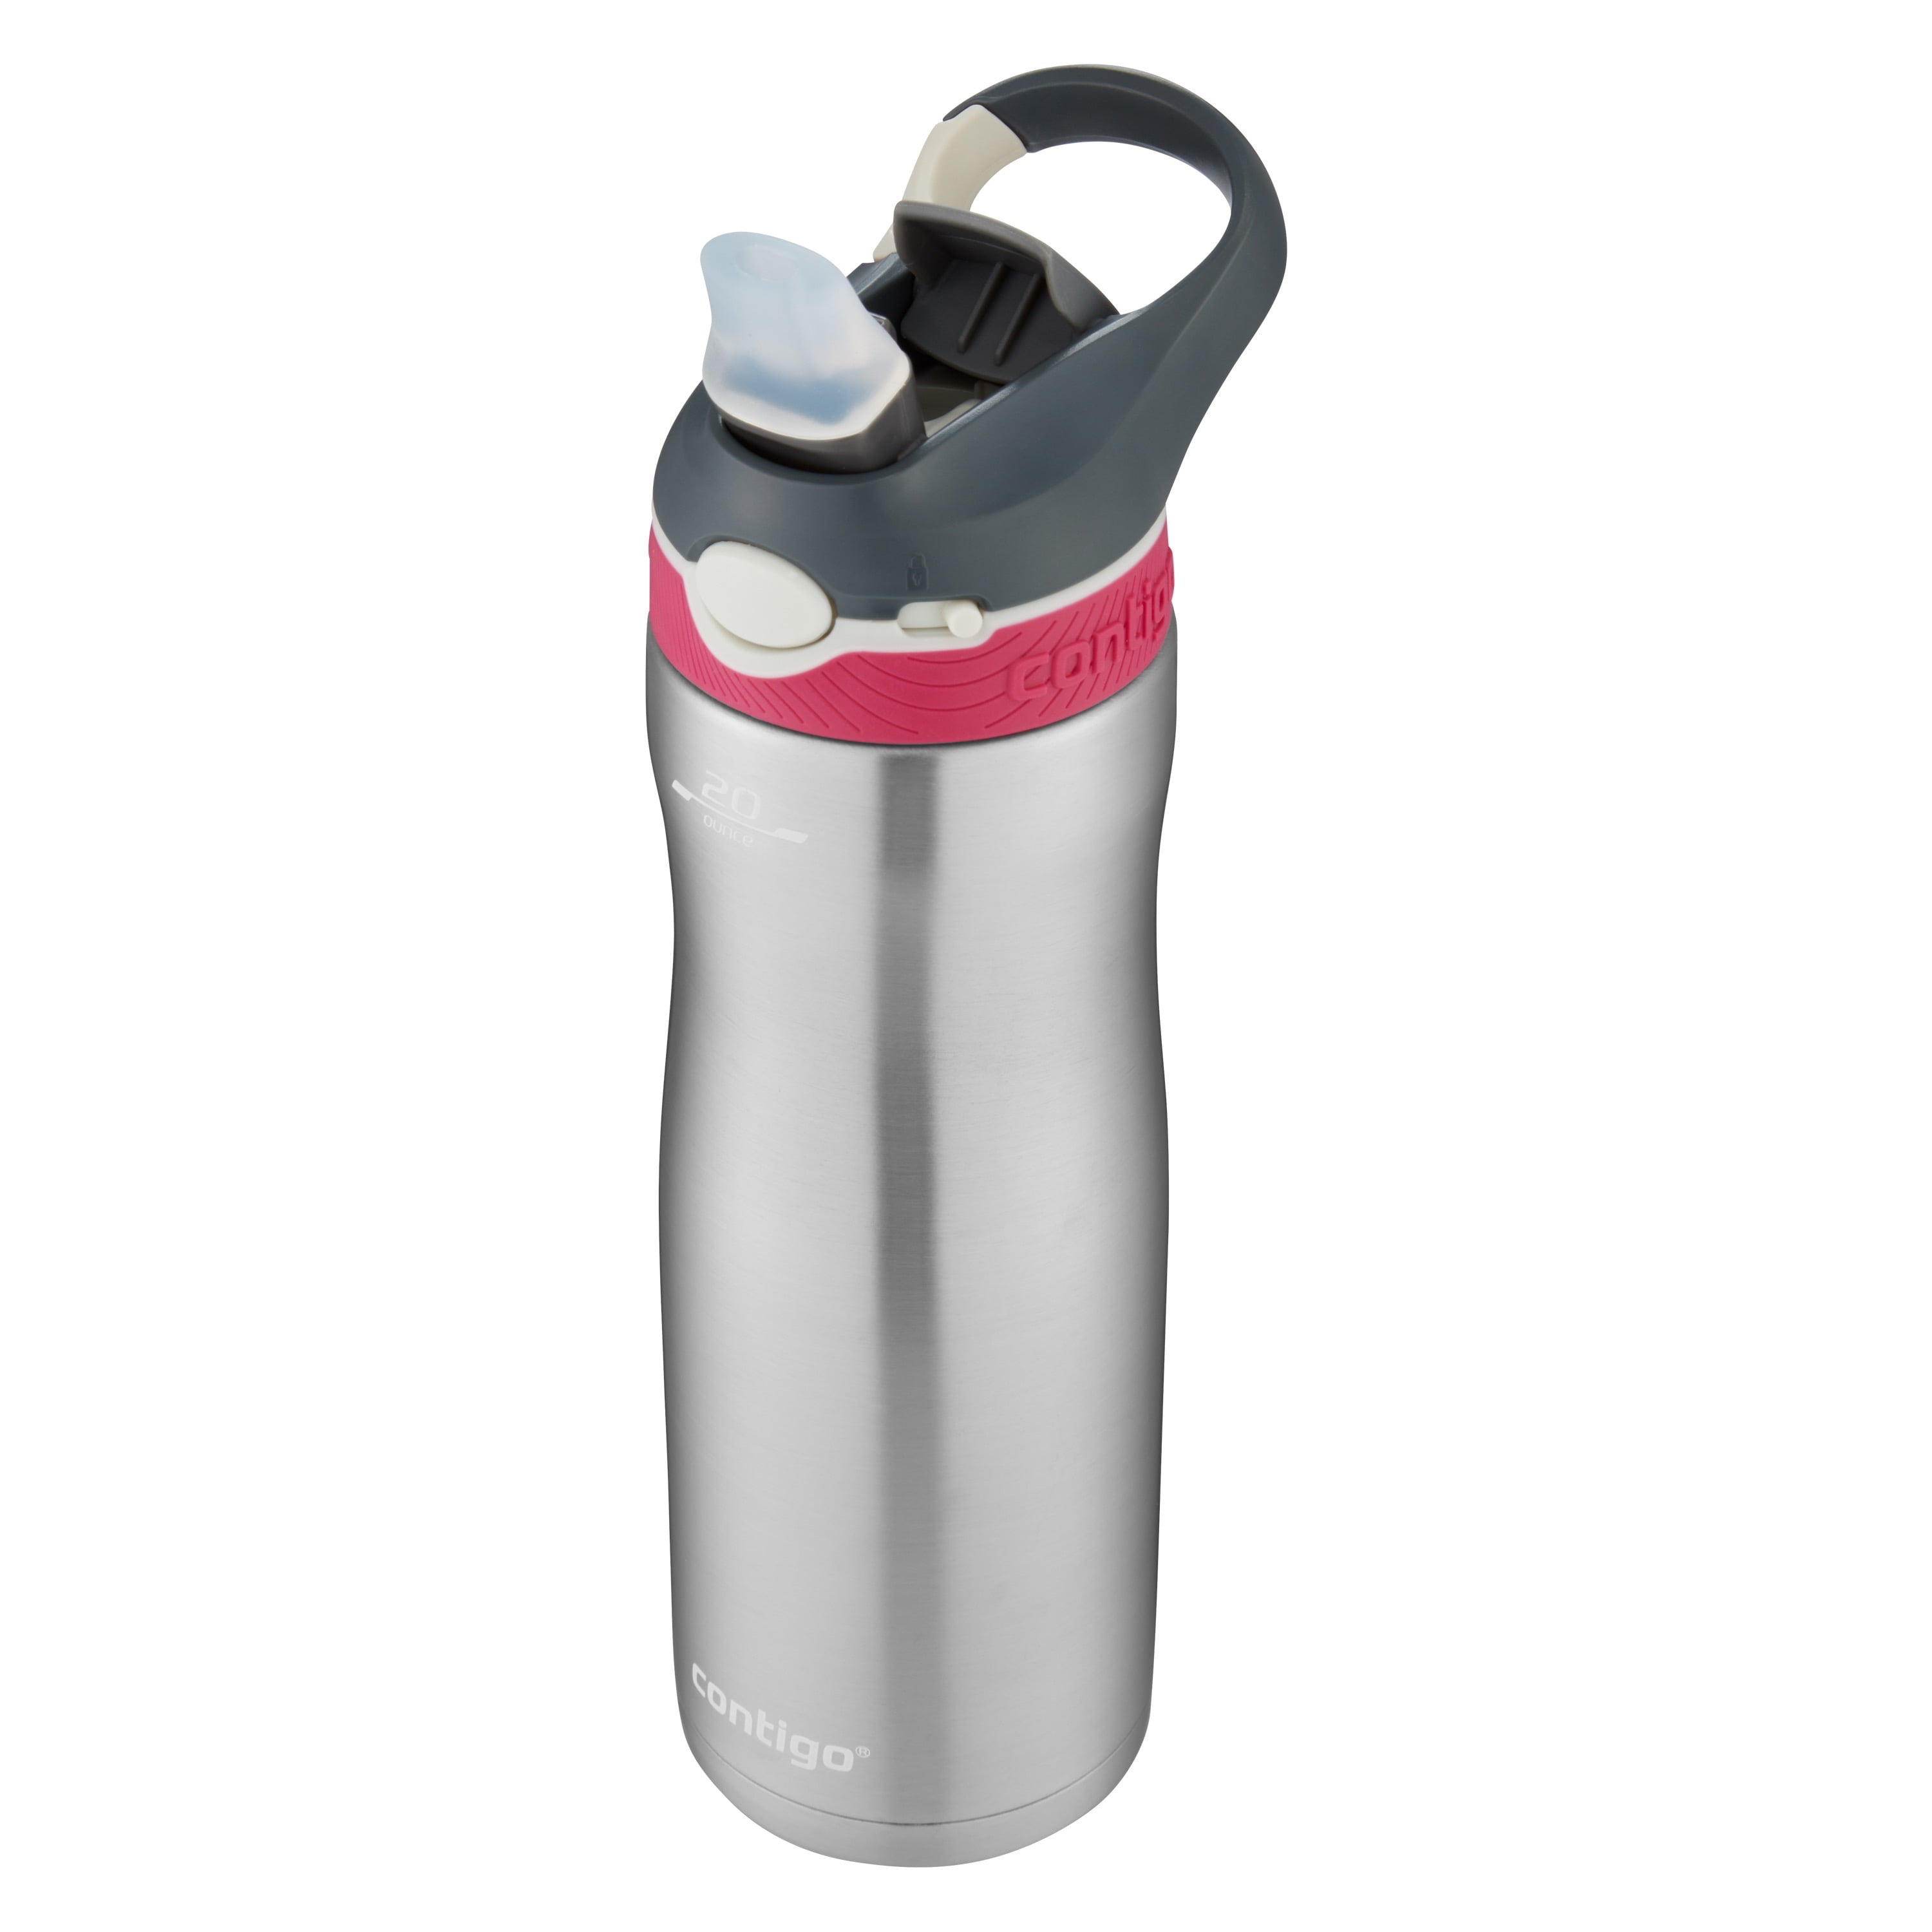 Contigo® Stainless Steel Ashland Chill Insulated Water Bottle